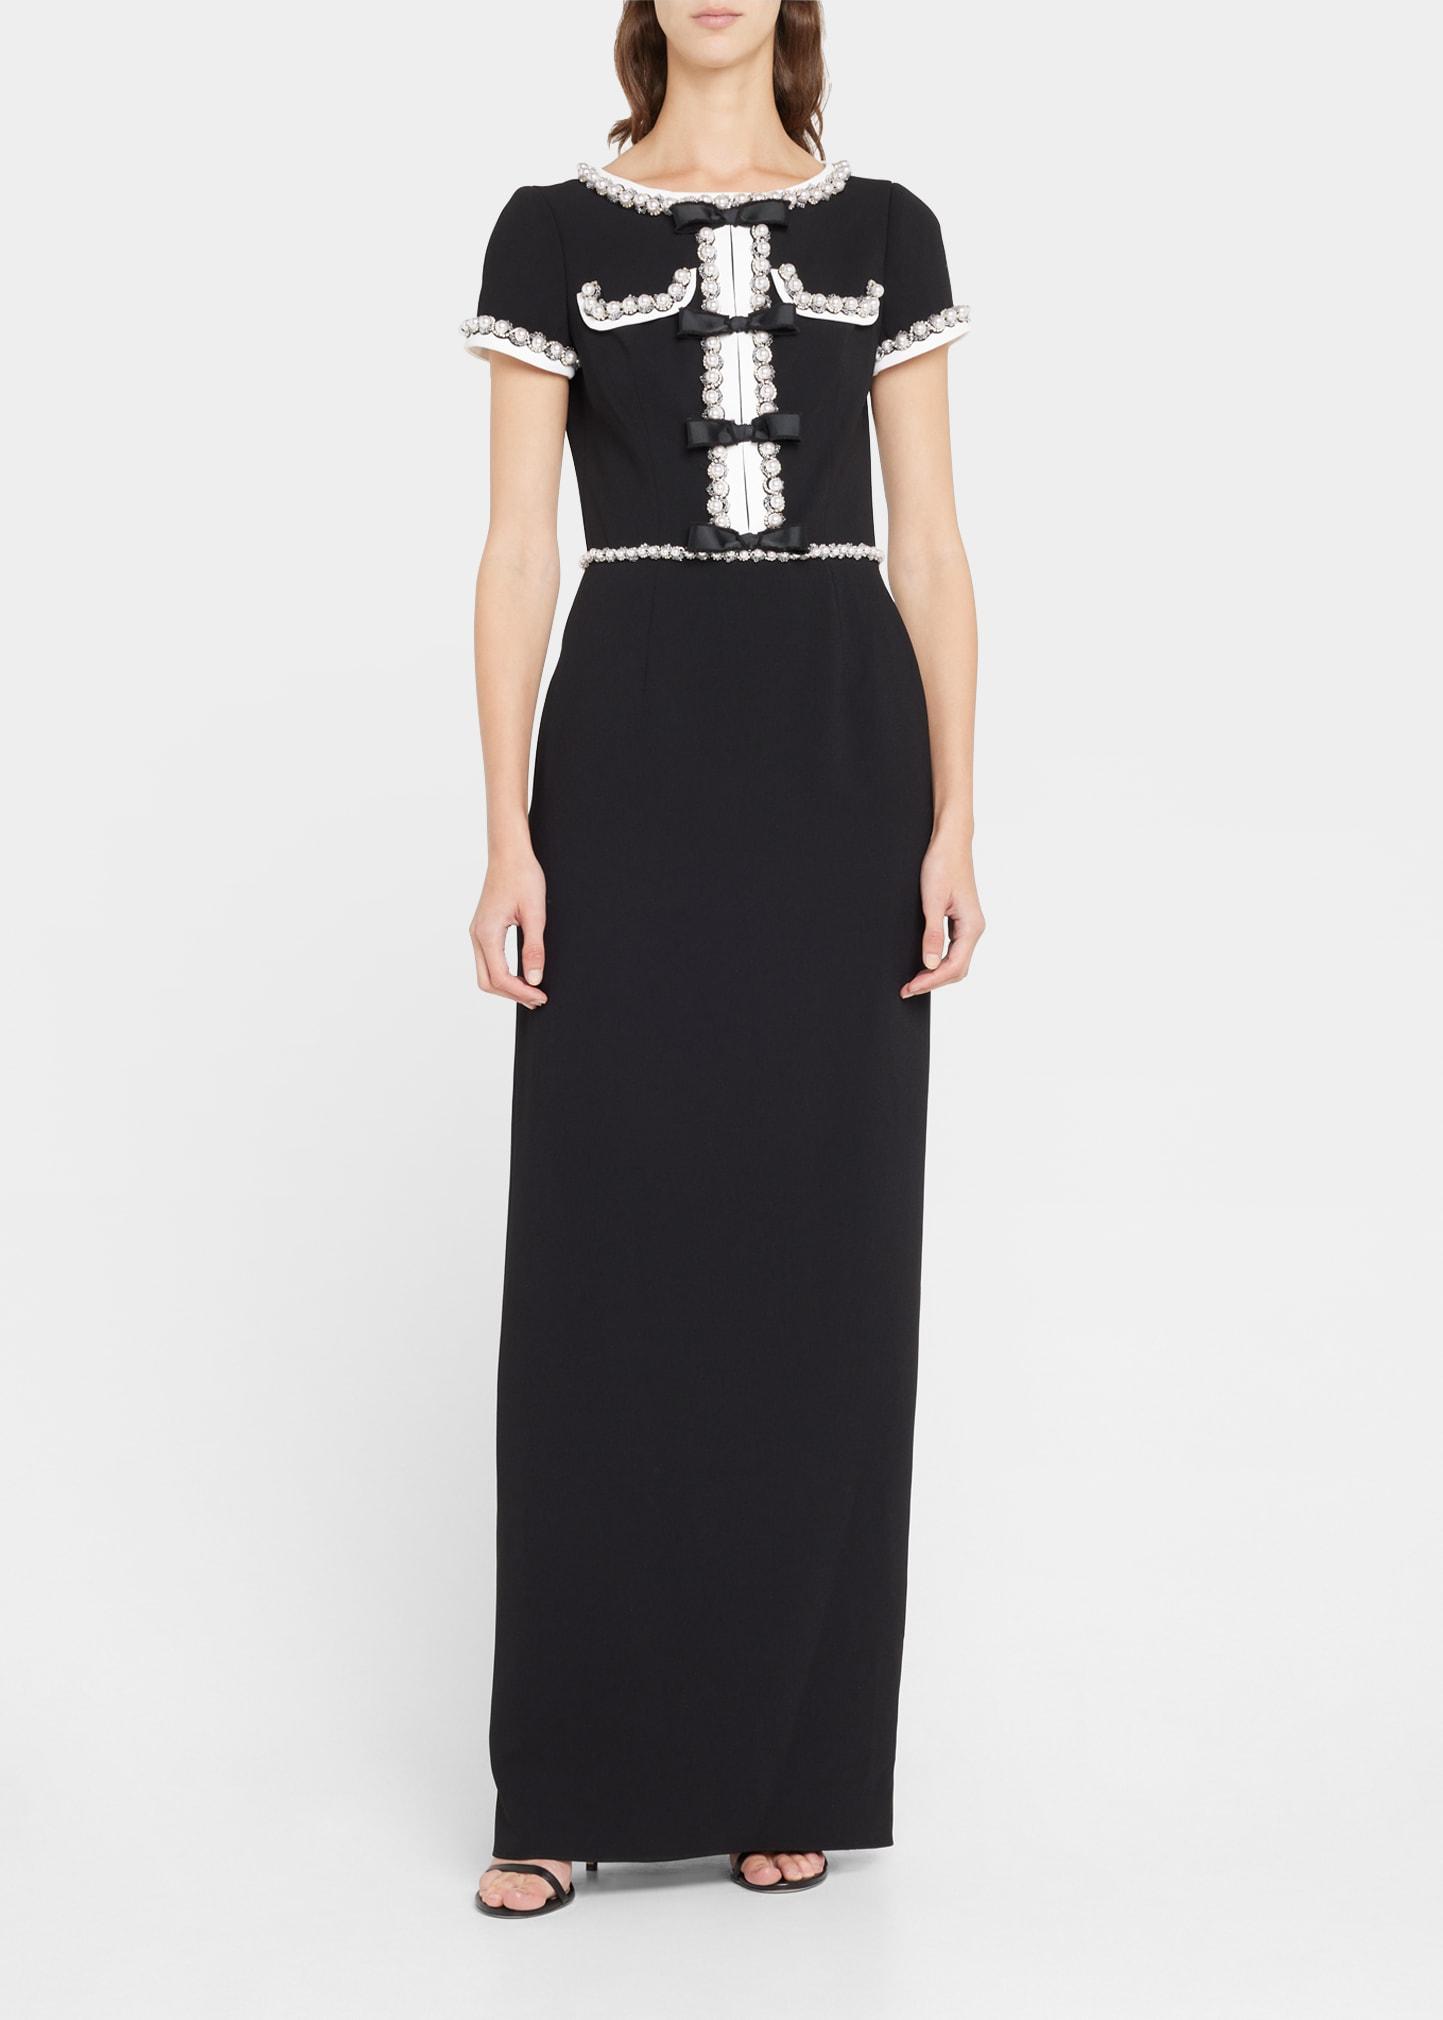 Jenny Packham Marta Crystal-pearl Embellished Column Dress in Black | Lyst